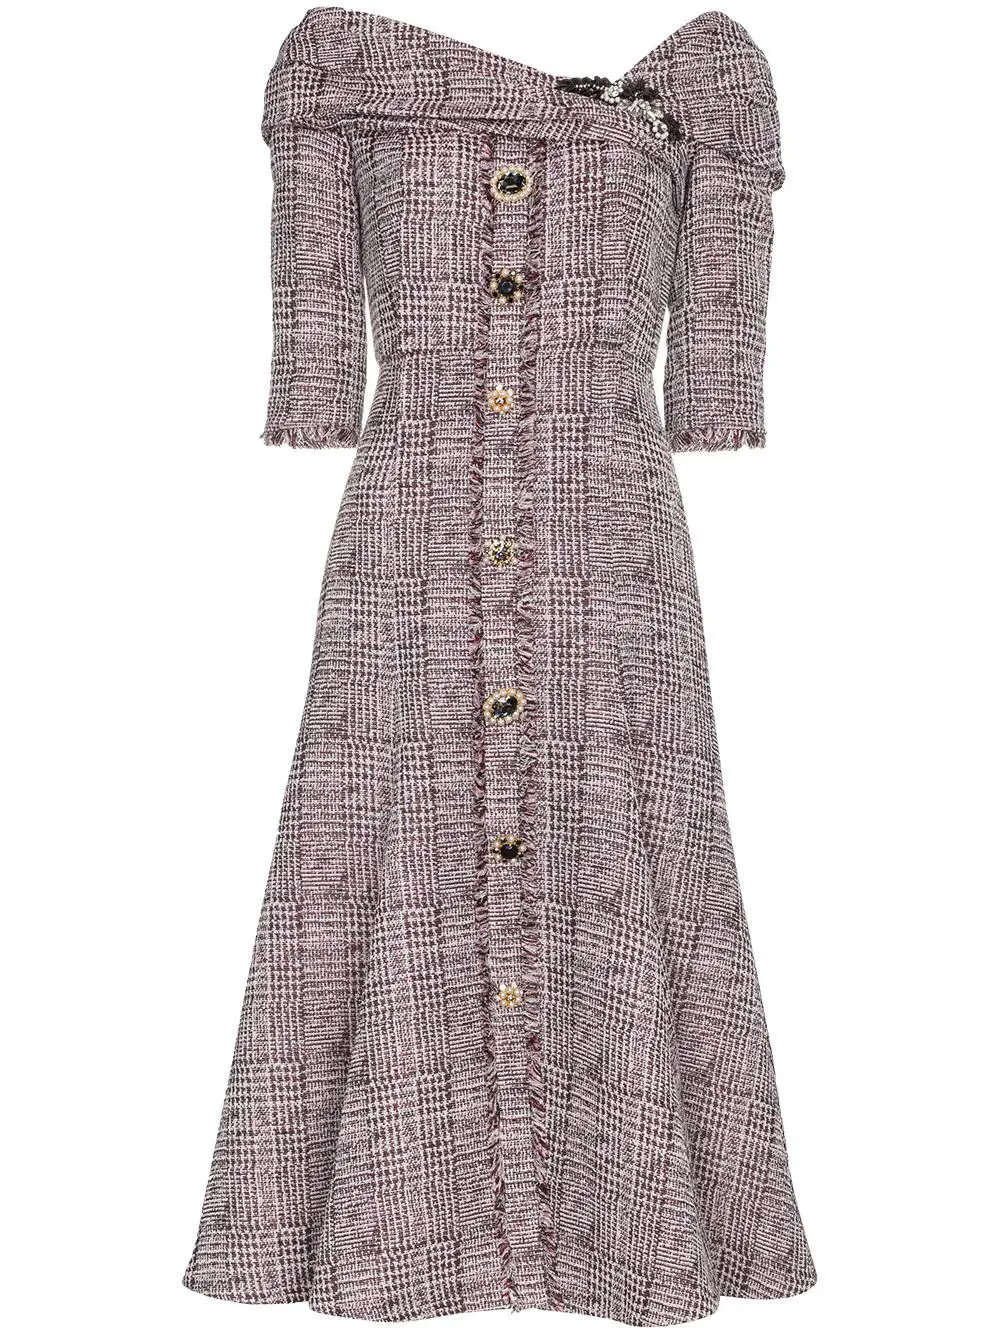 The Duchess of Cambridge wore Erdem Iman Dress to Victoria and Albert Museum